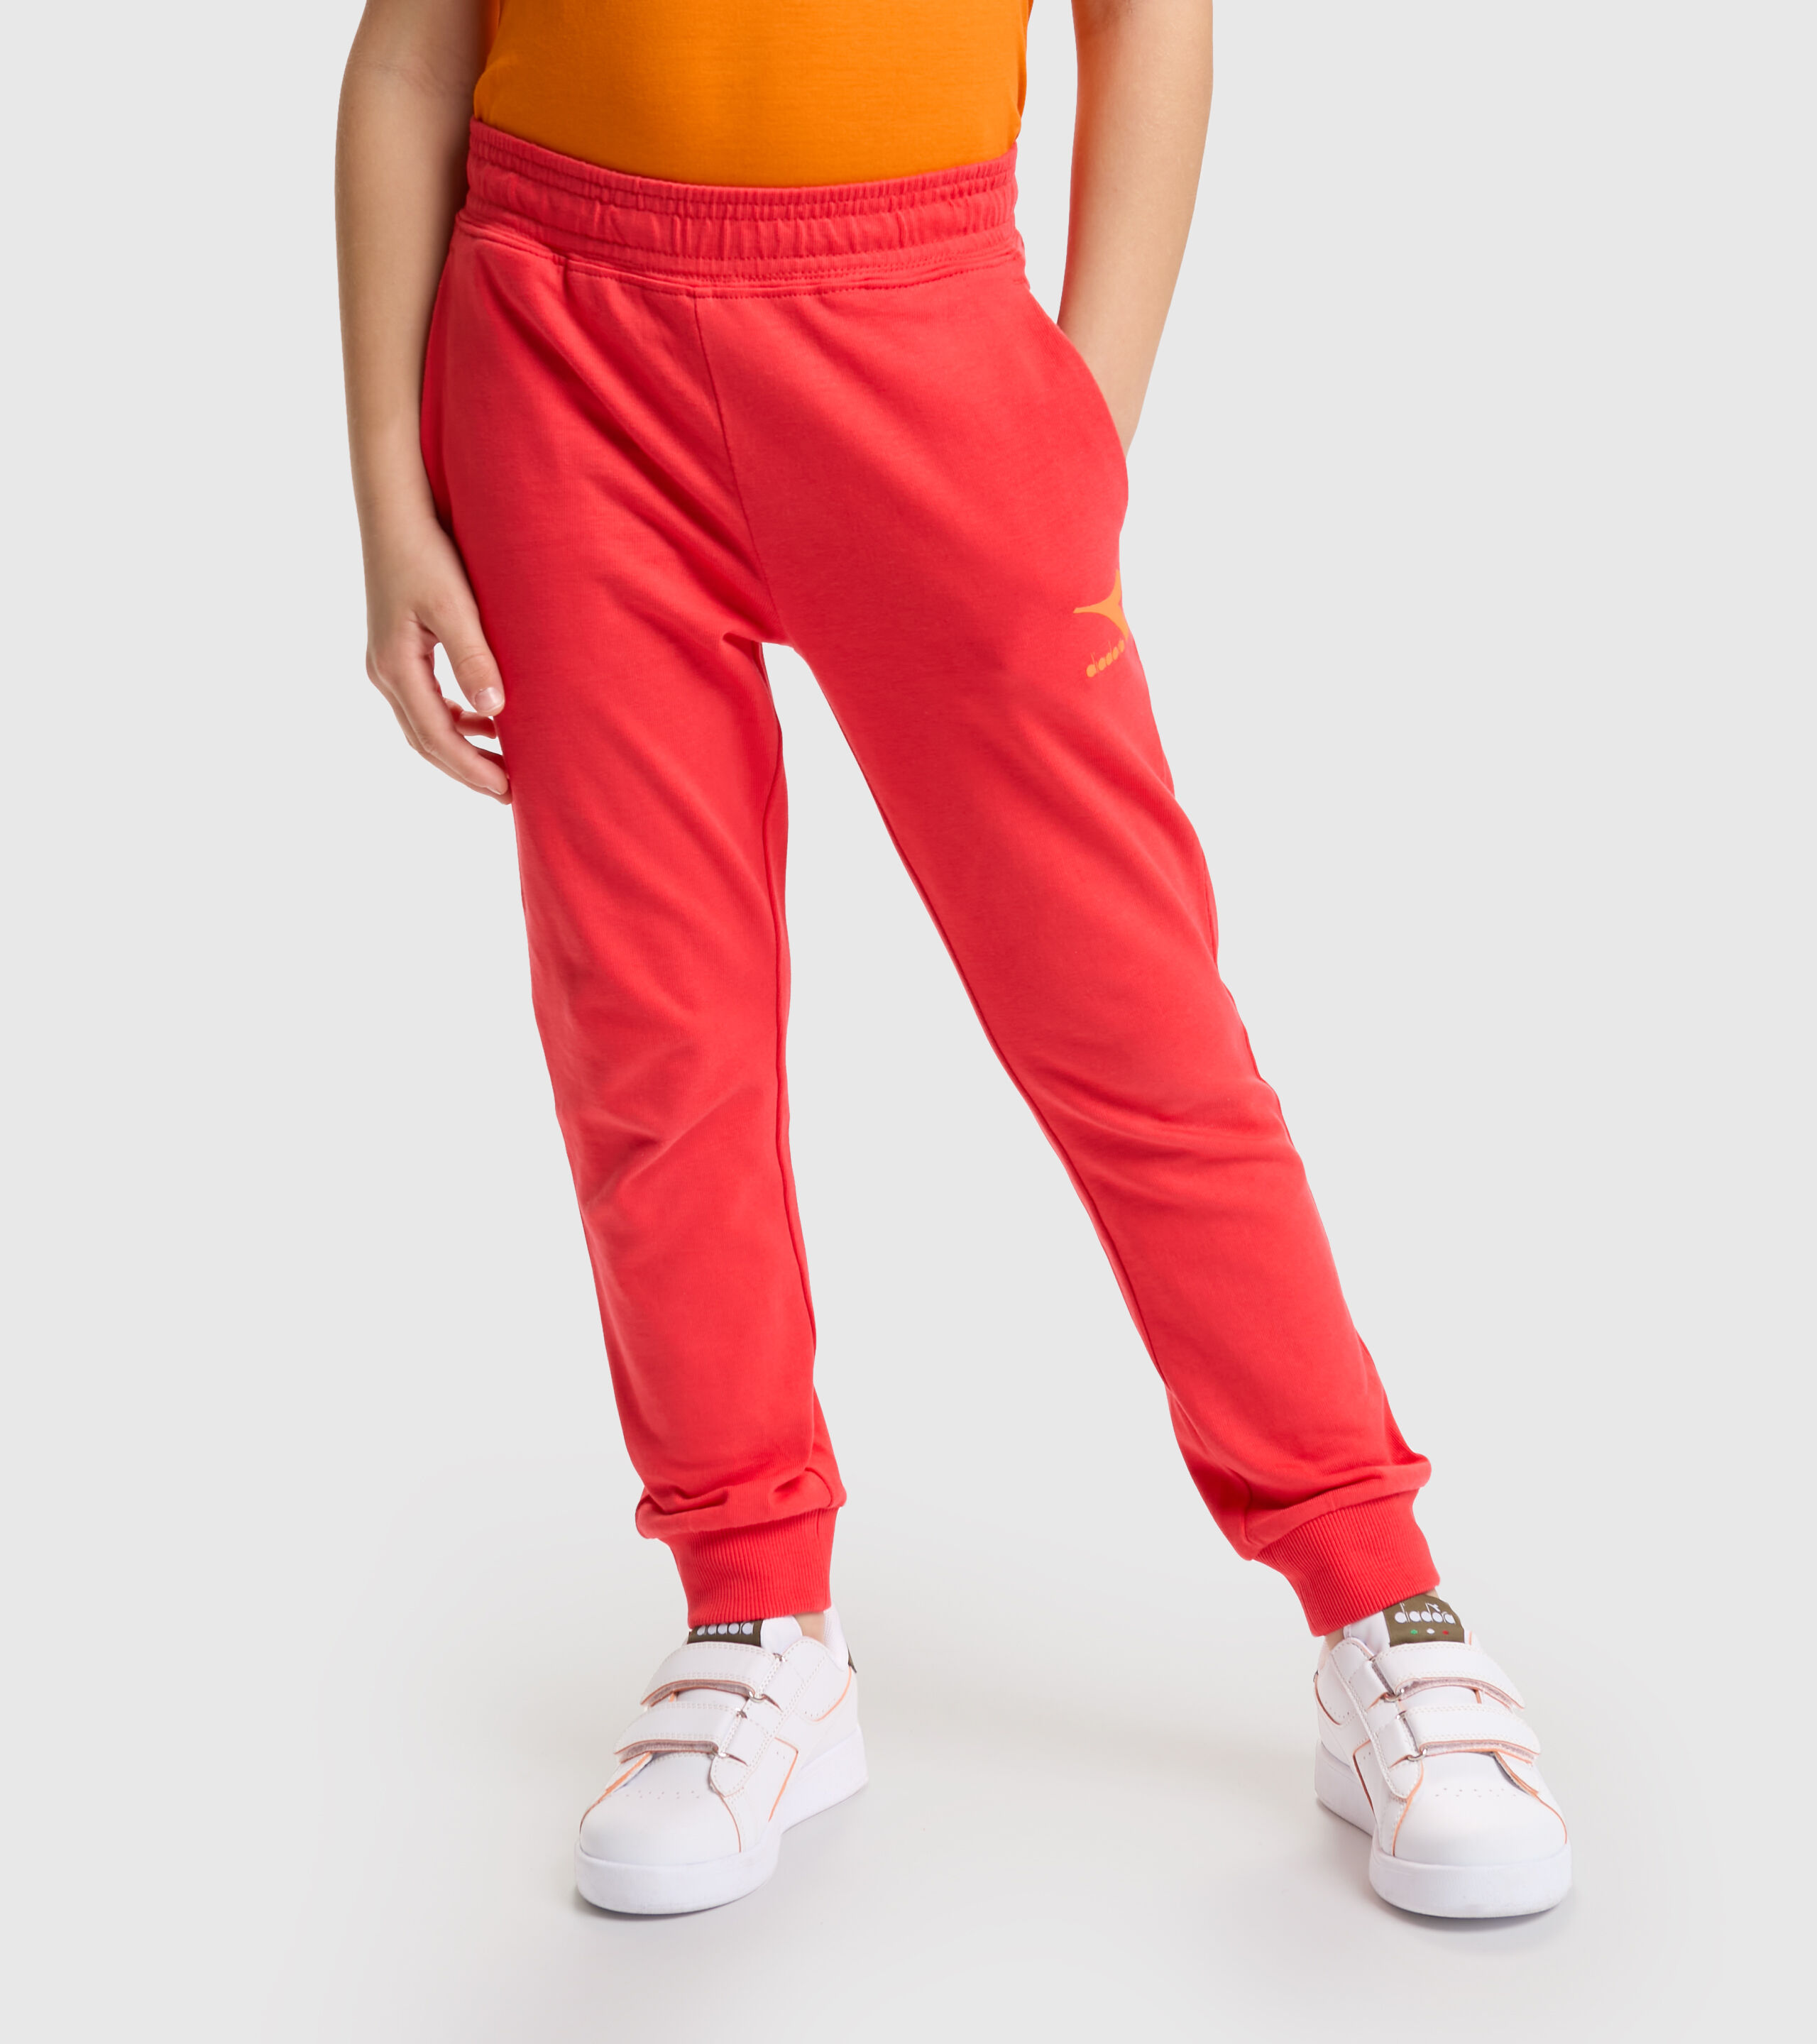 Lars Amadeus Striped Dress Pants for Mens Contrast Color Rainbow Stripe  Trousers  Walmartcom